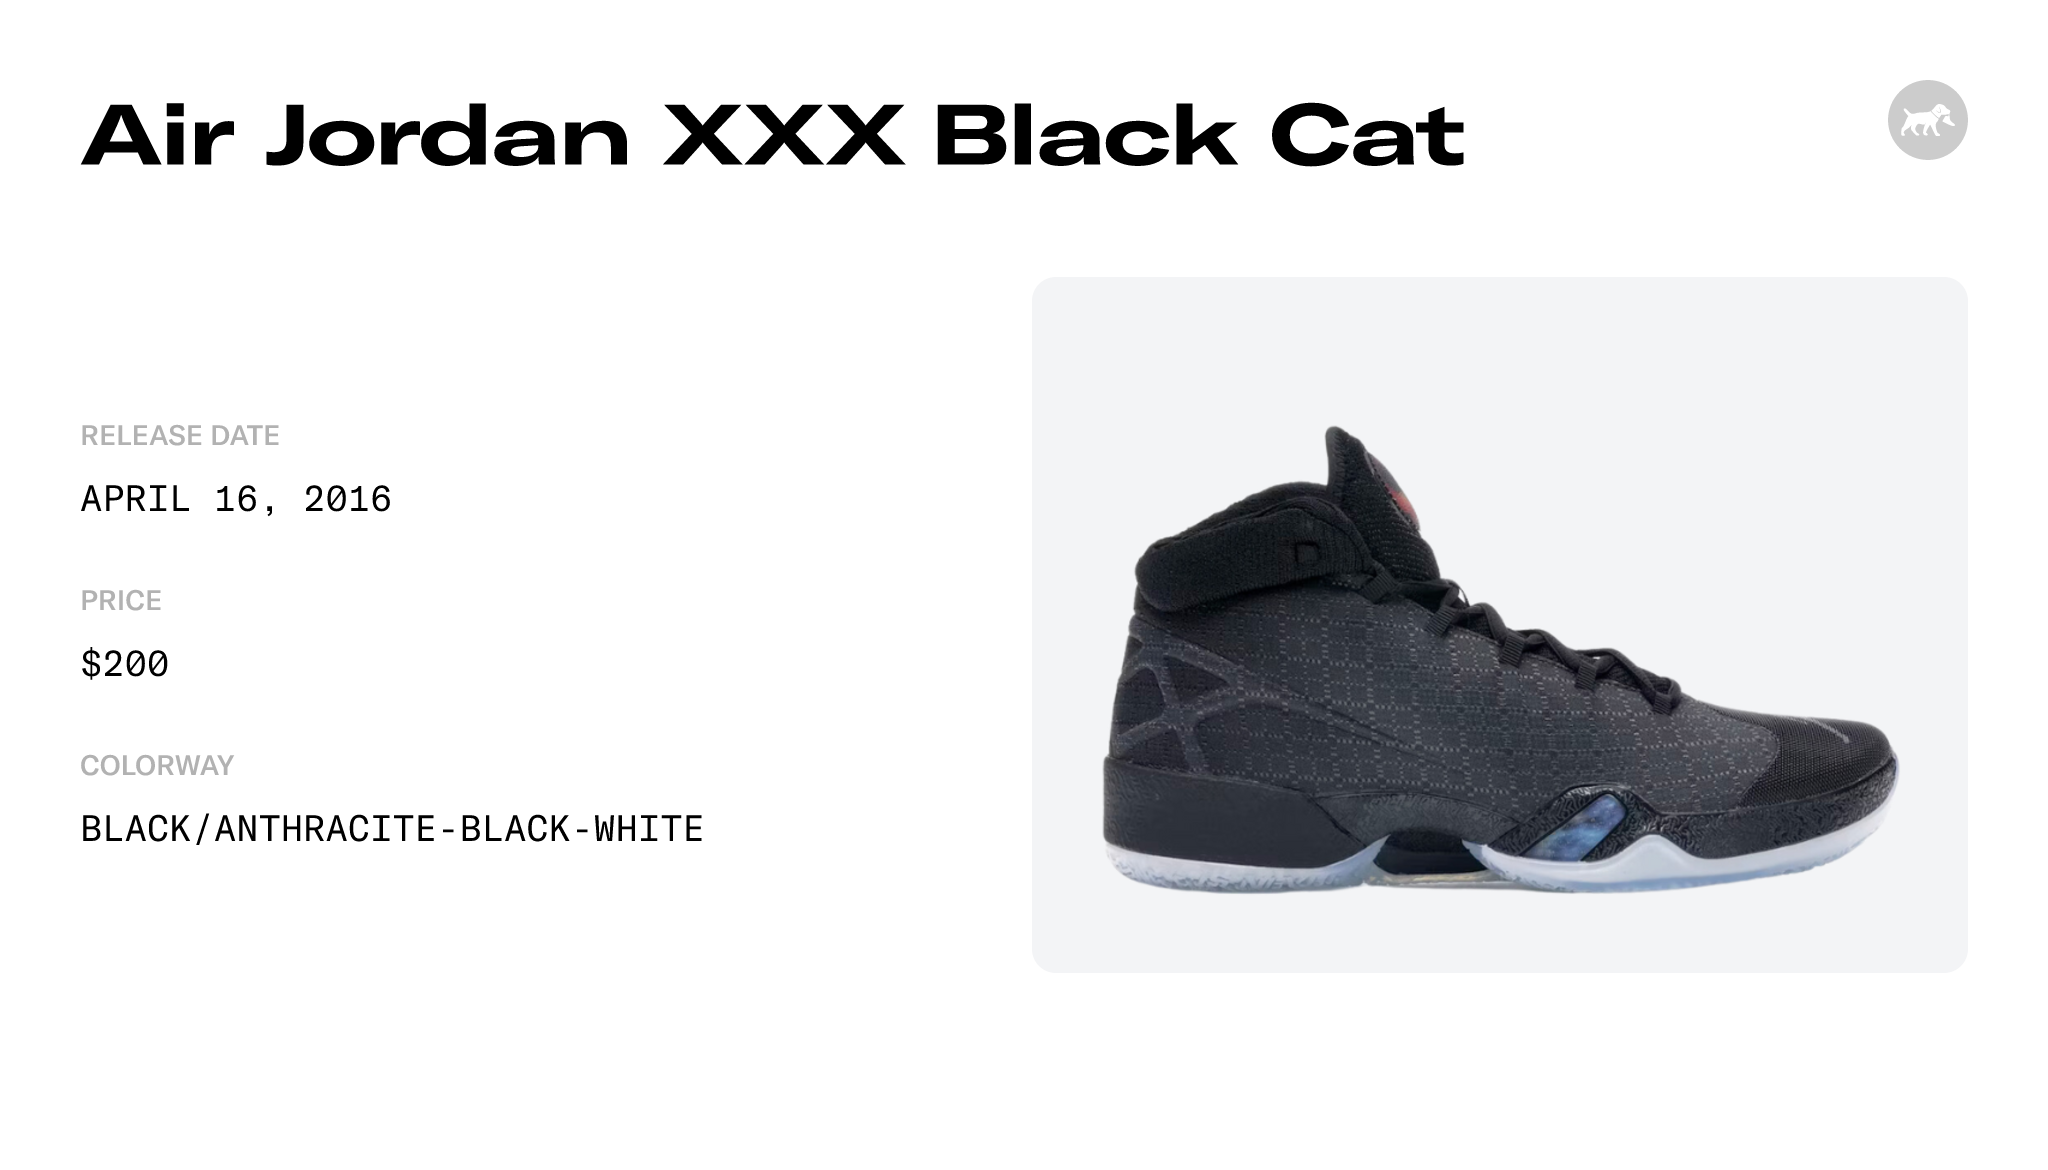 Air Jordan XXX Black Cat - 811006-010 Raffles and Release Date